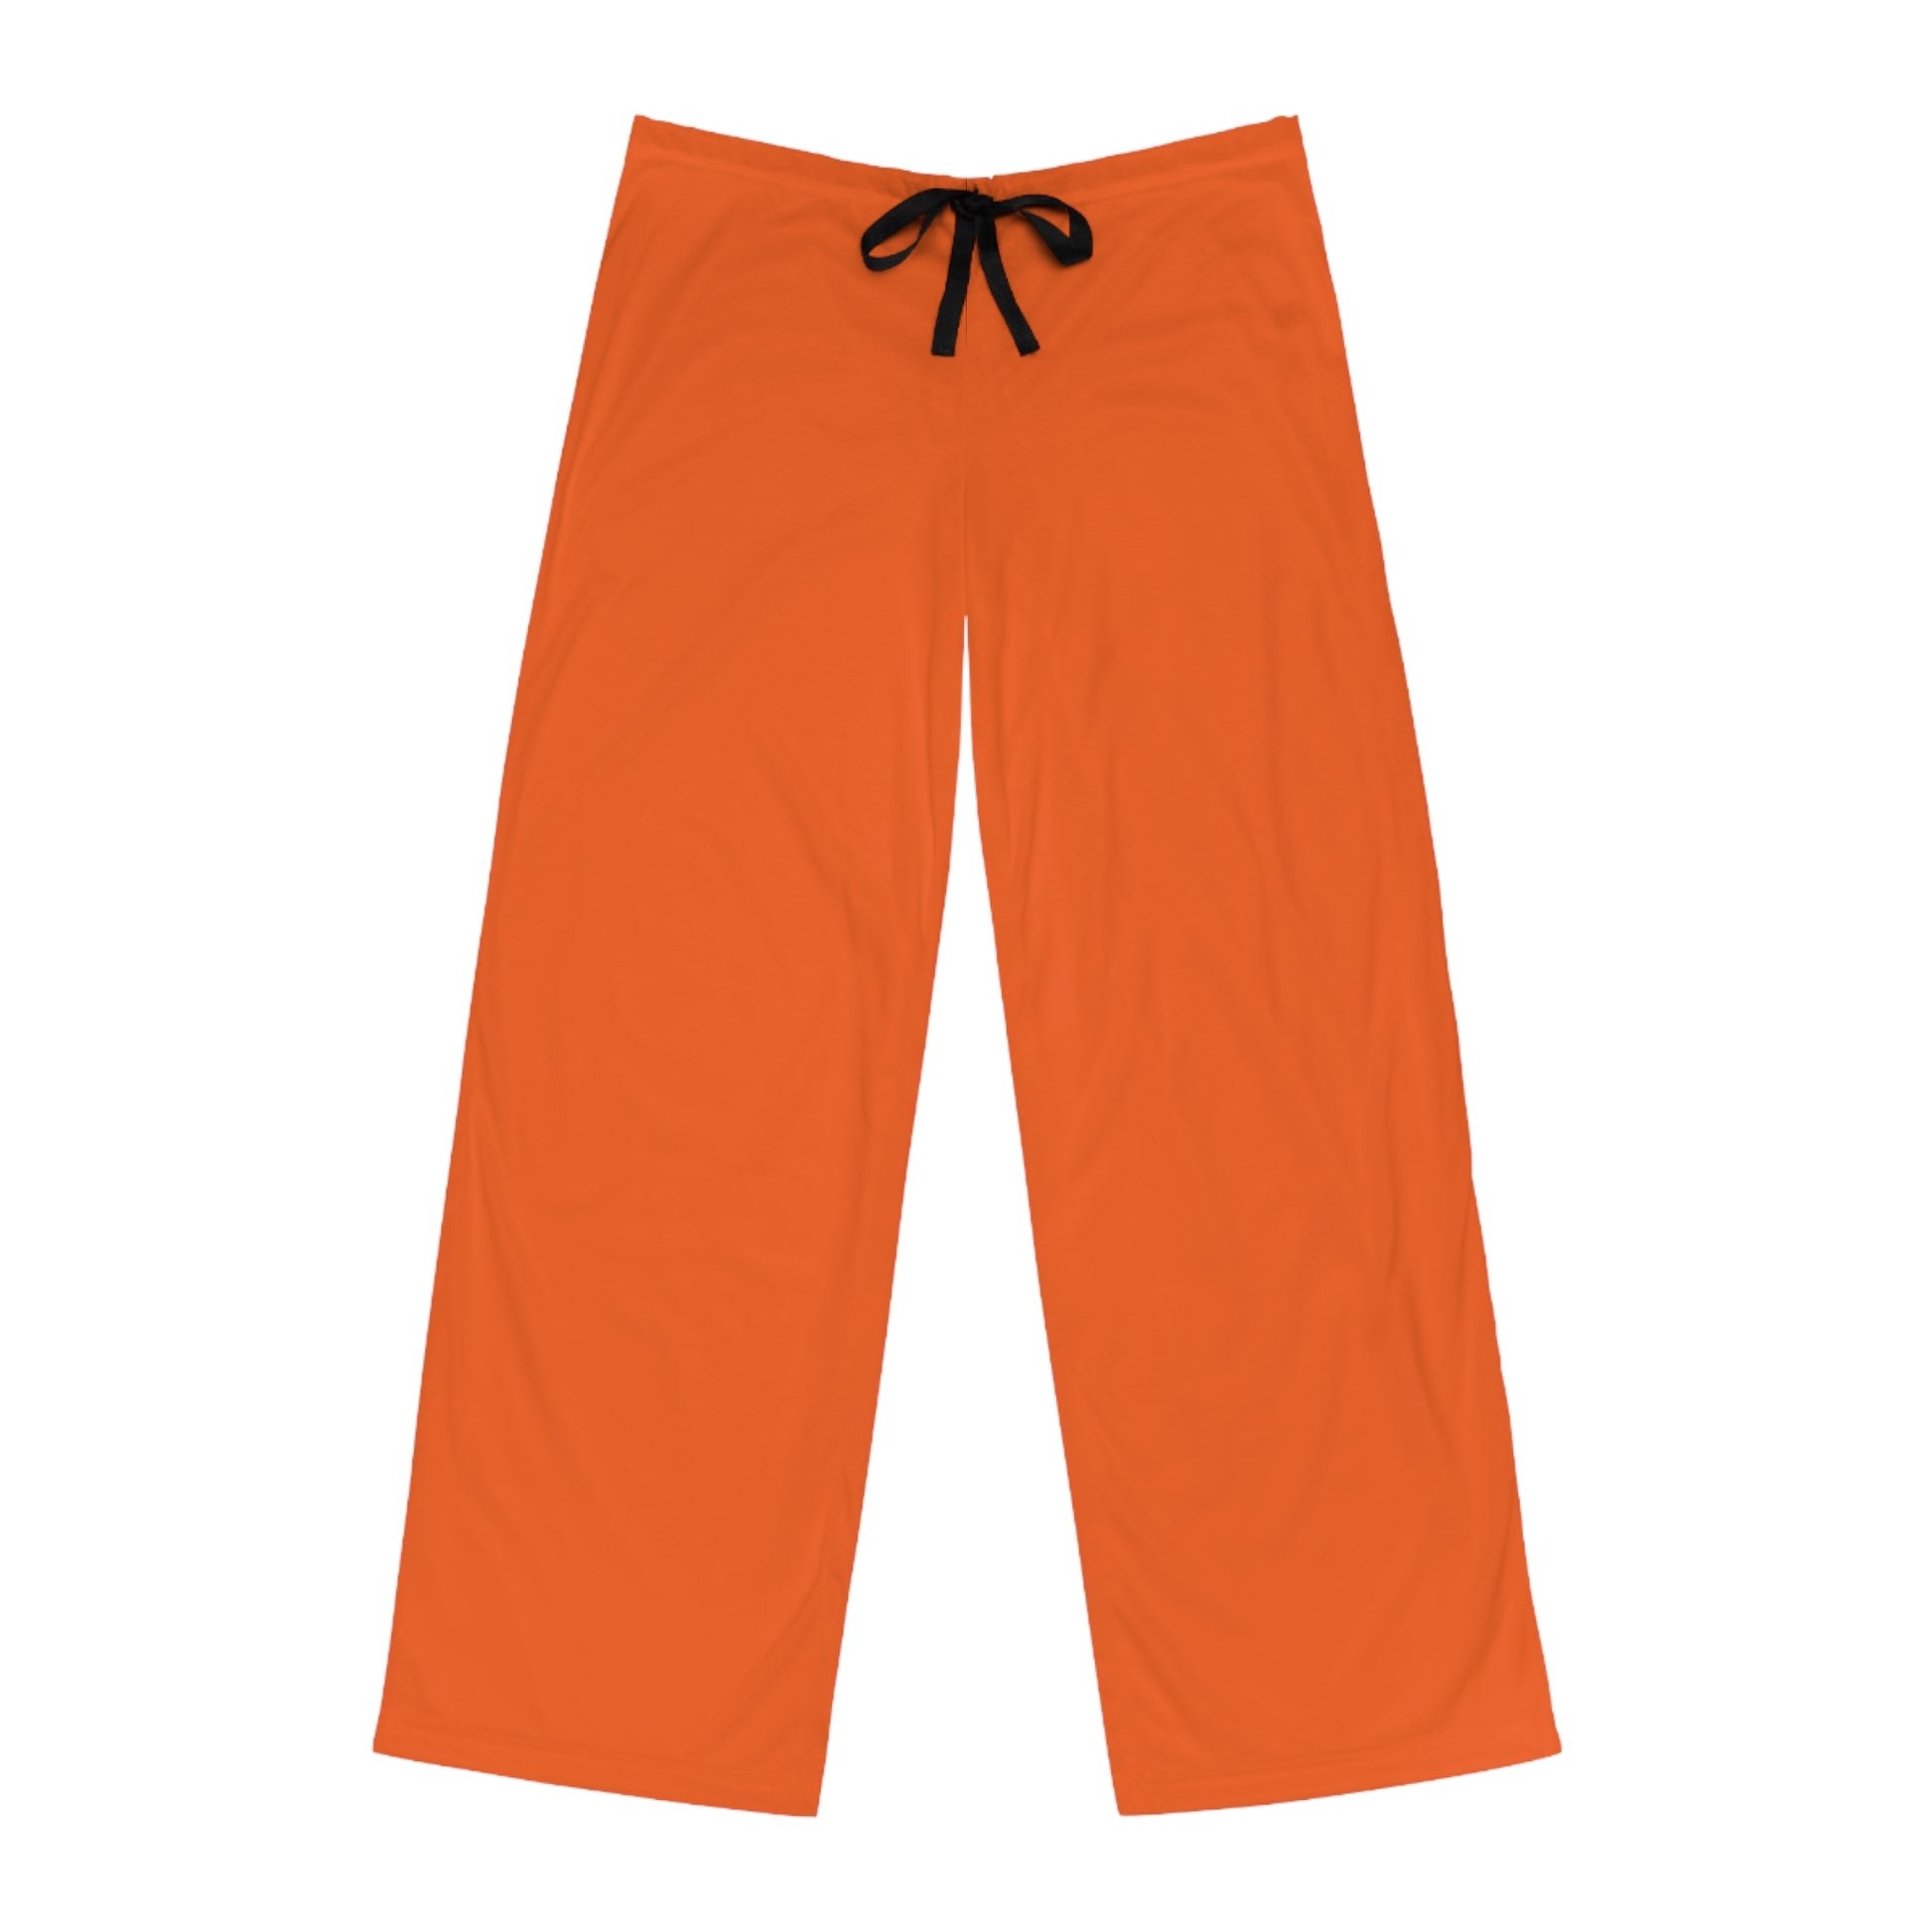 Men's Pajama Pants - Orange